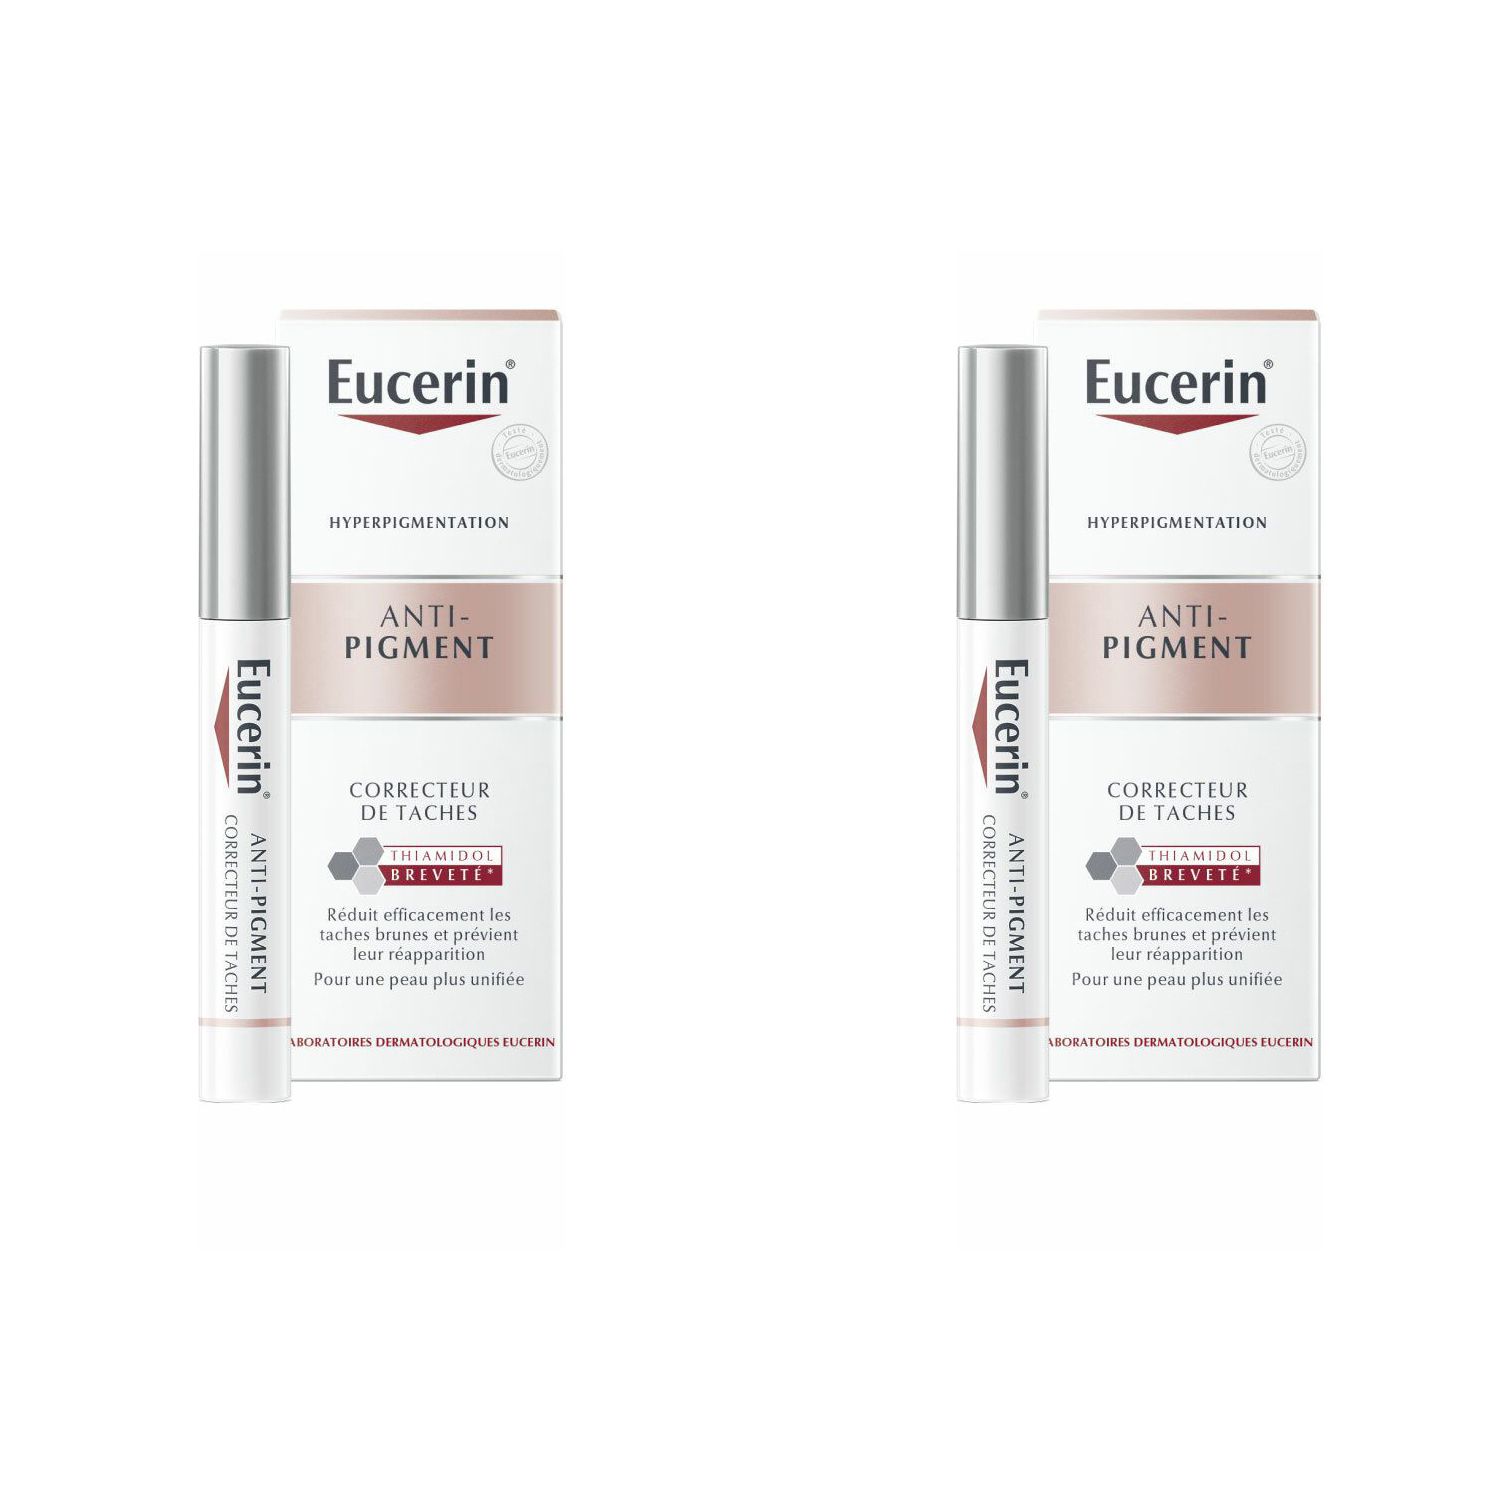 Eucerin® Hyperpigmentation Anti-Pigment Correcteur de Taches